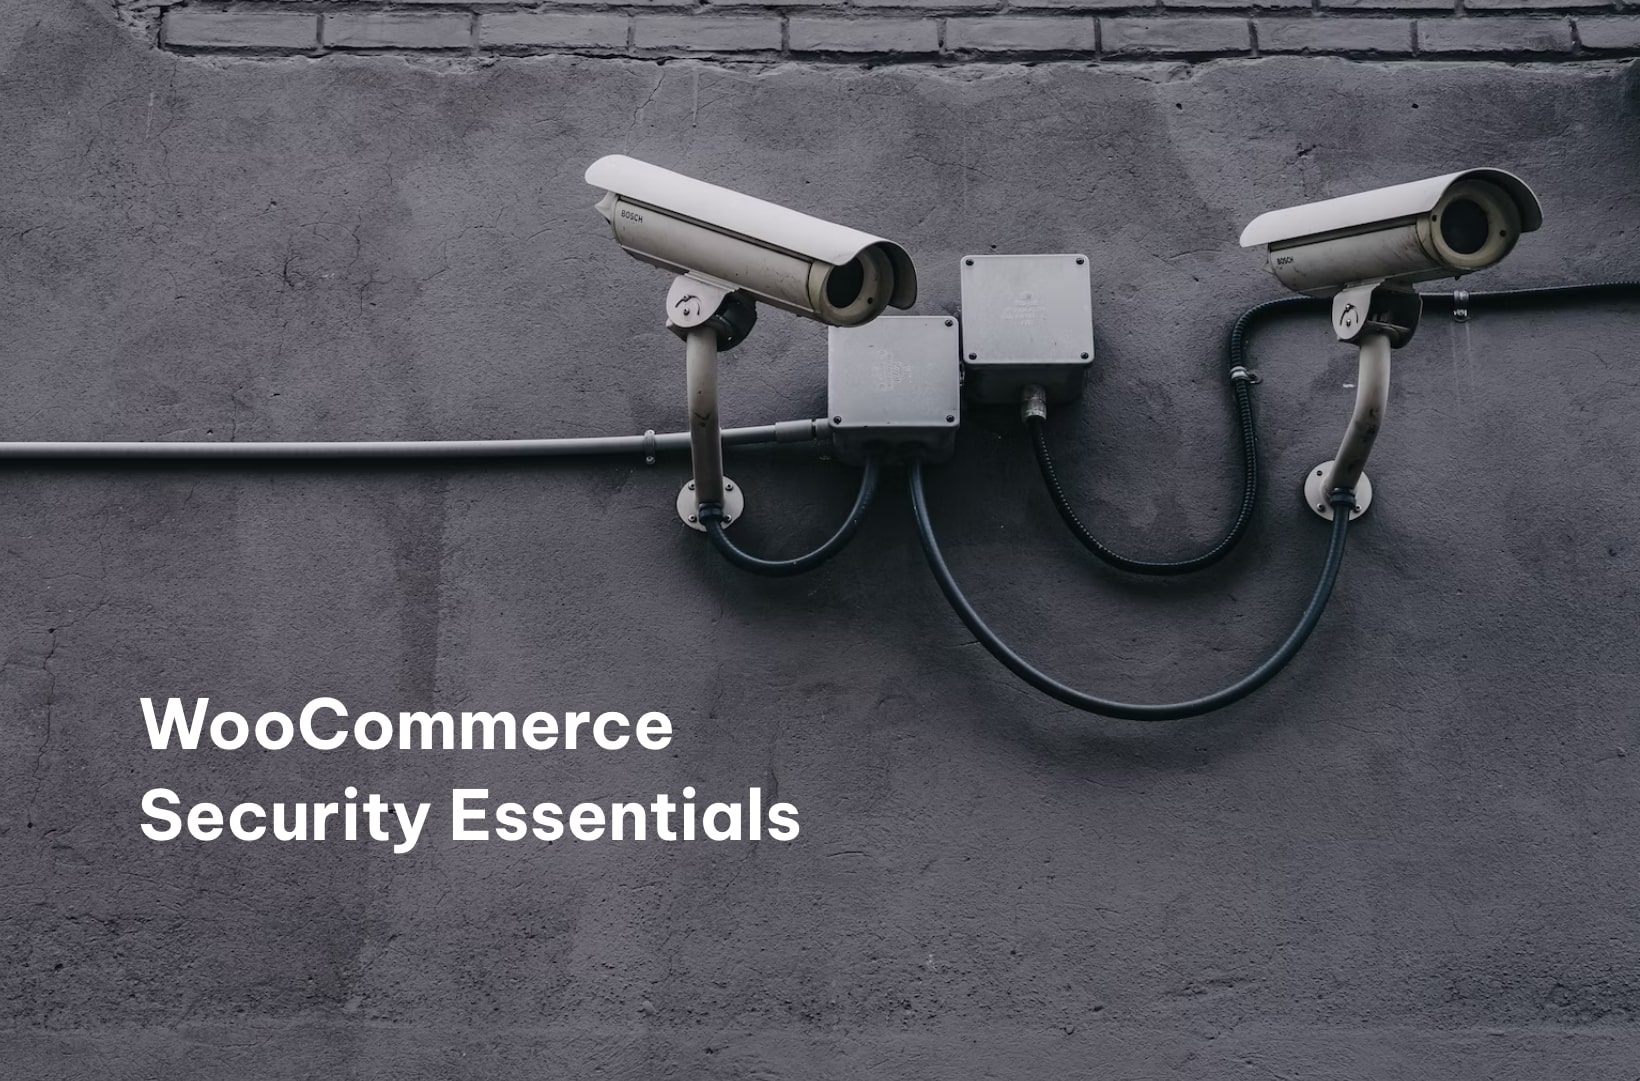 WooCommerce security essentials